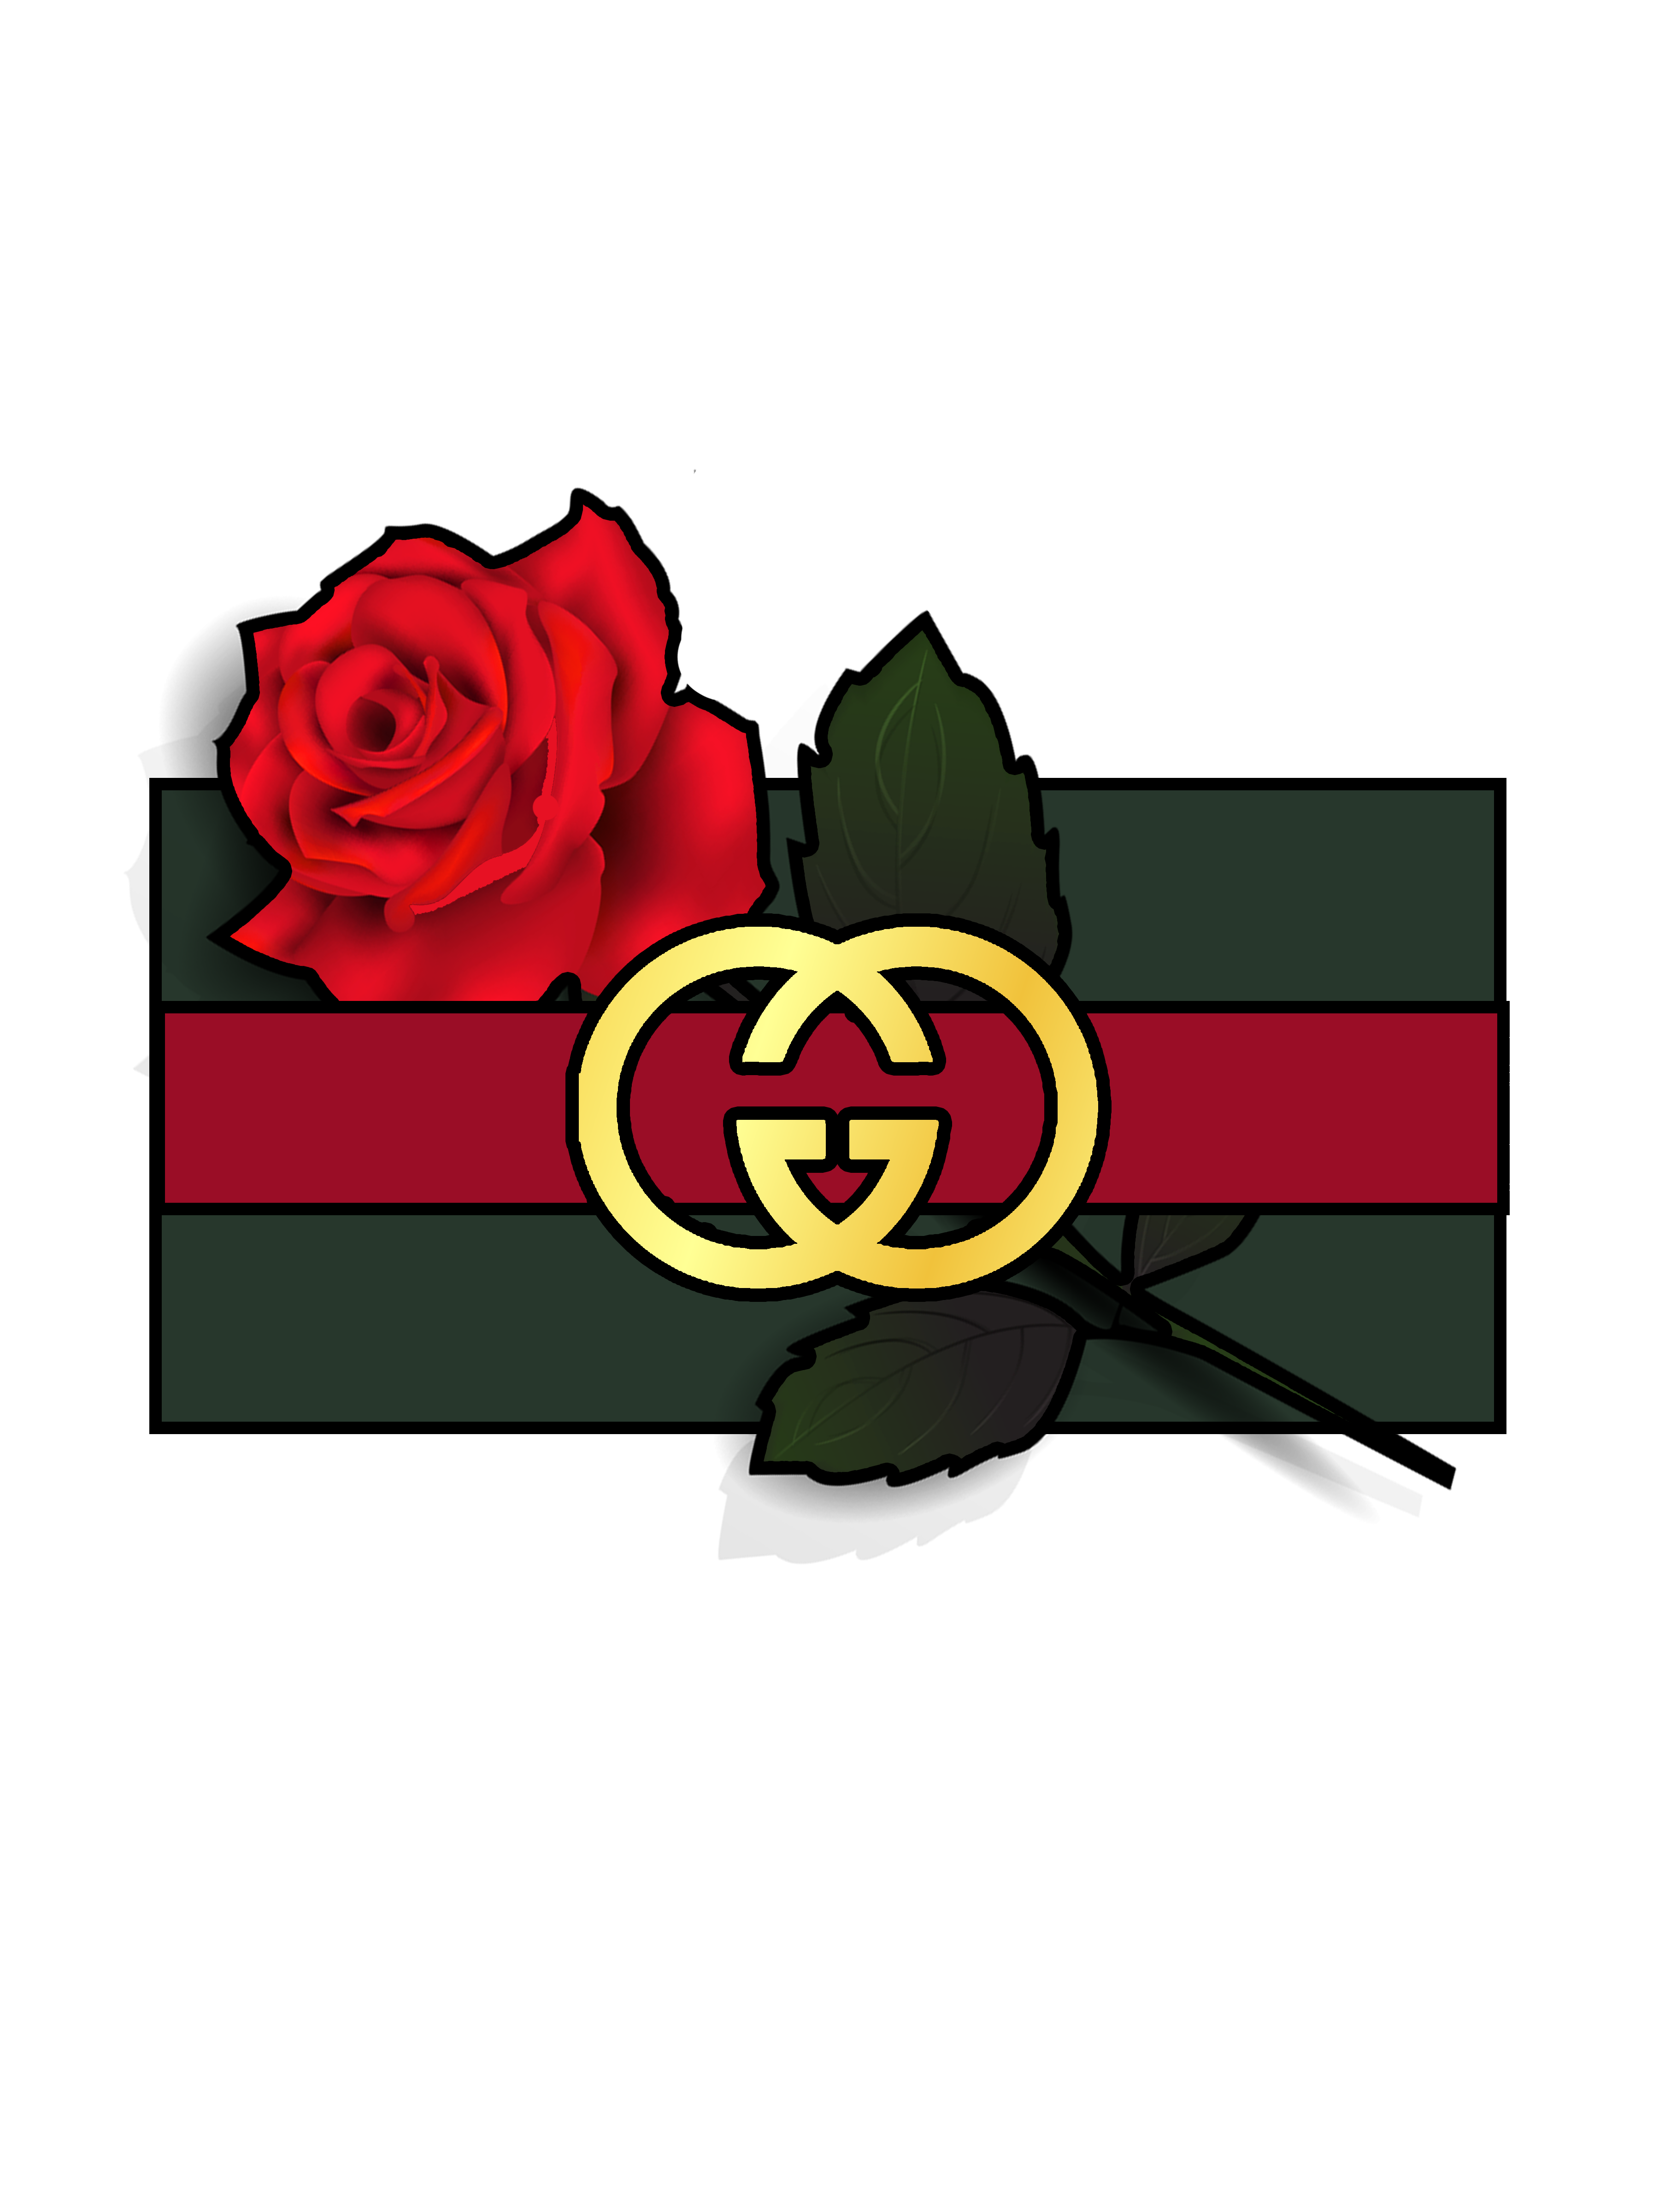 Gucci Logo PNG Free Download